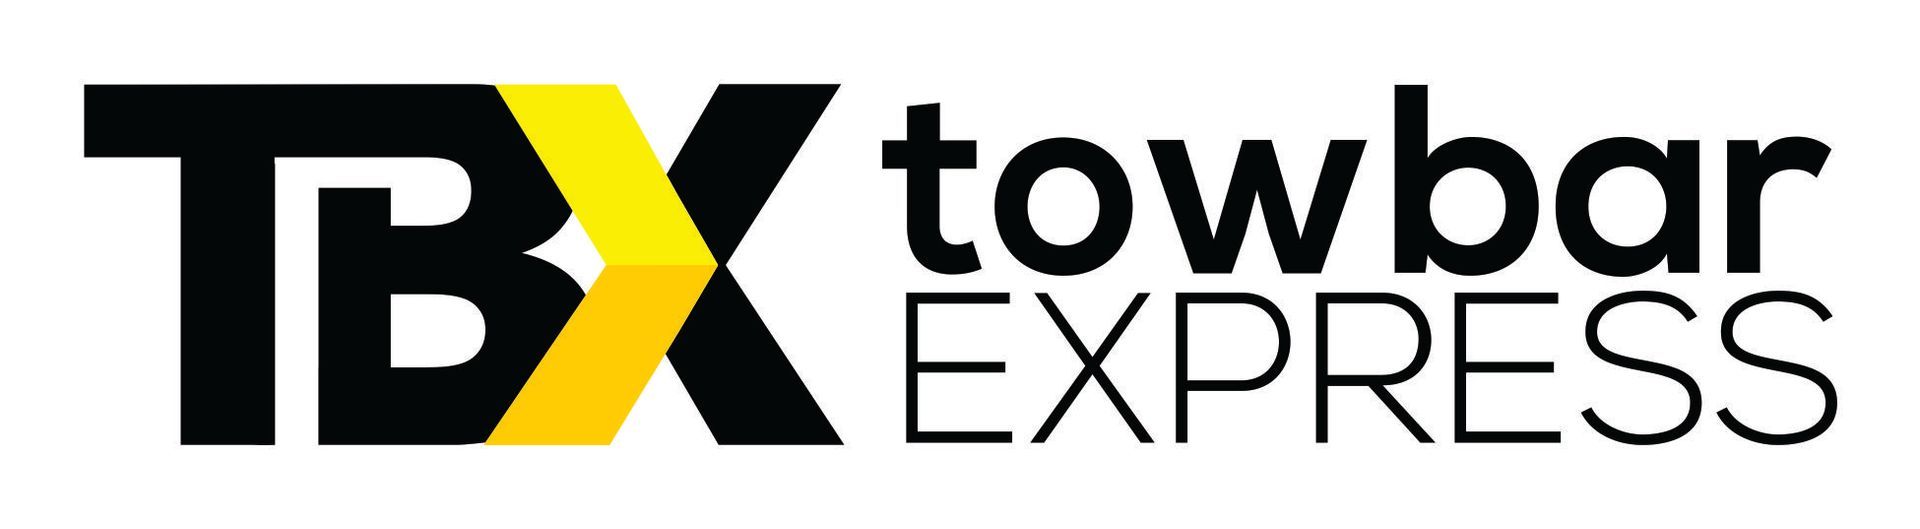 Towbar Express Logo